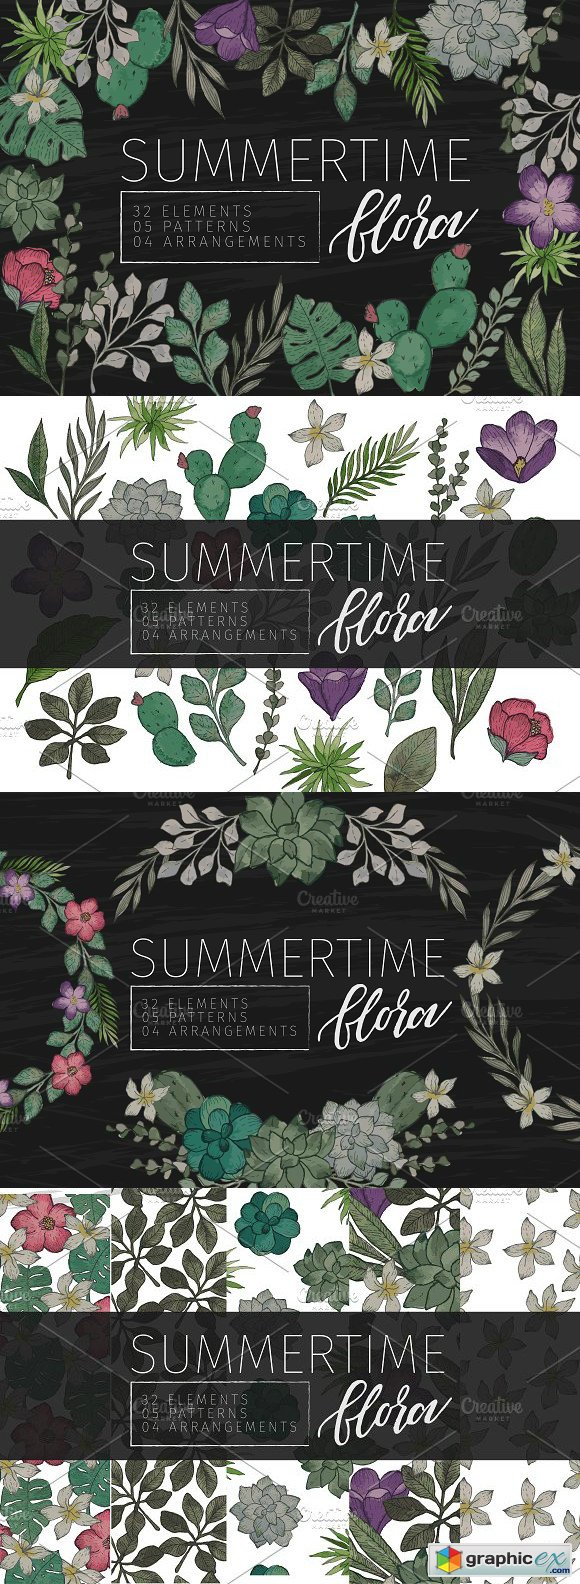 Summertime Flora Vector Watercolor